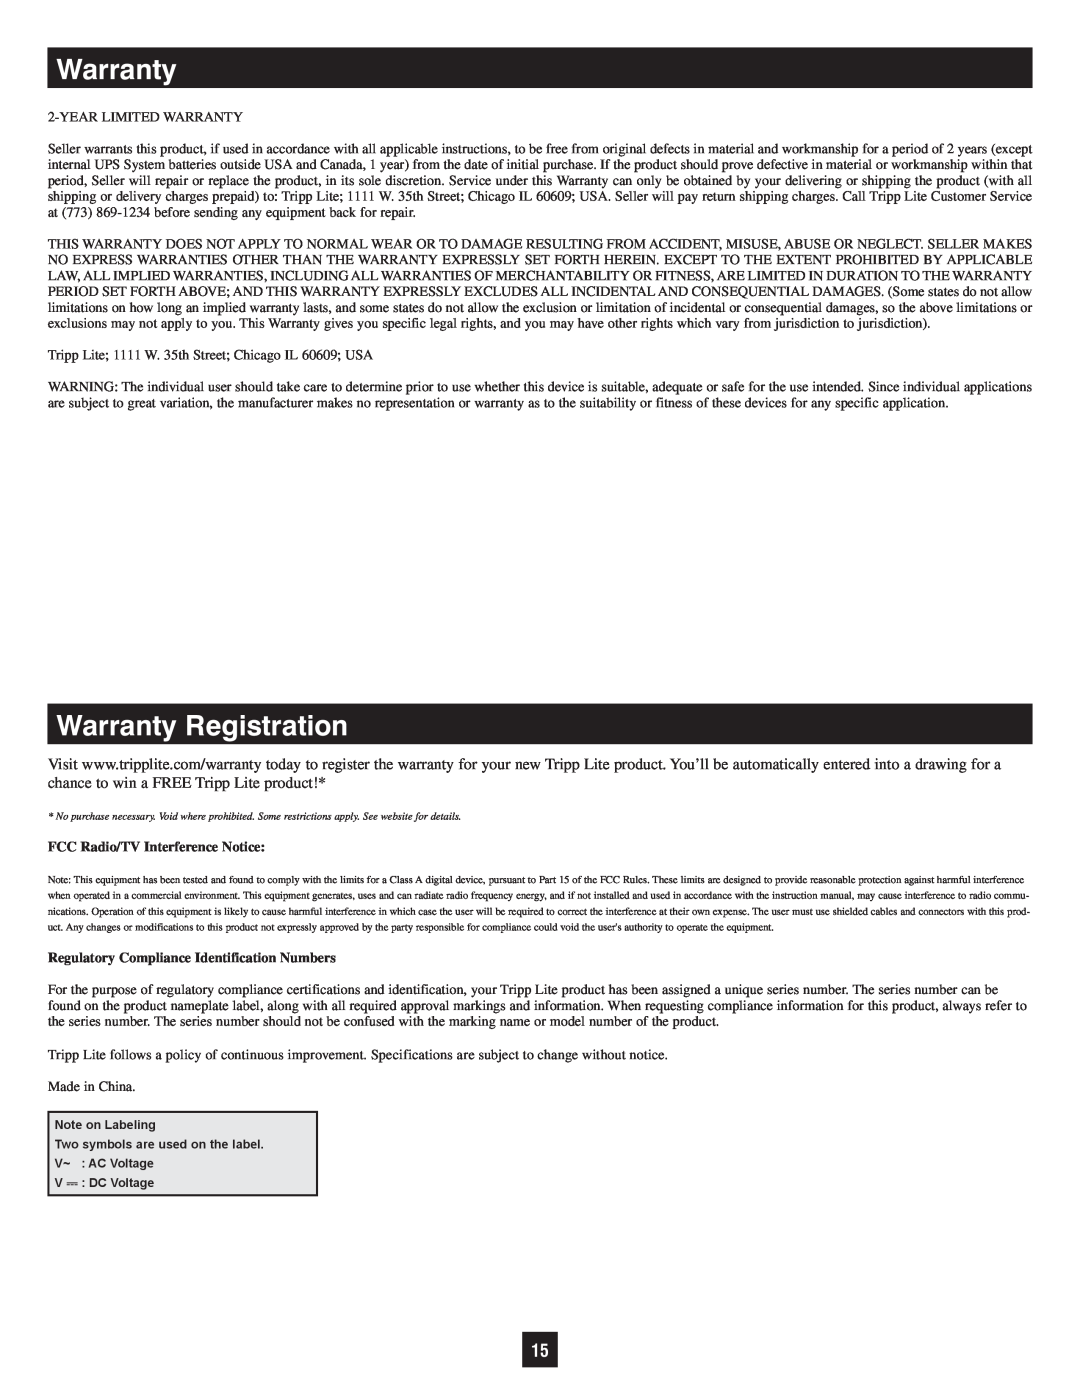 Tripp Lite SMART3000RMOD2U owner manual Warranty Registration, FCC Radio/TV Interference Notice 